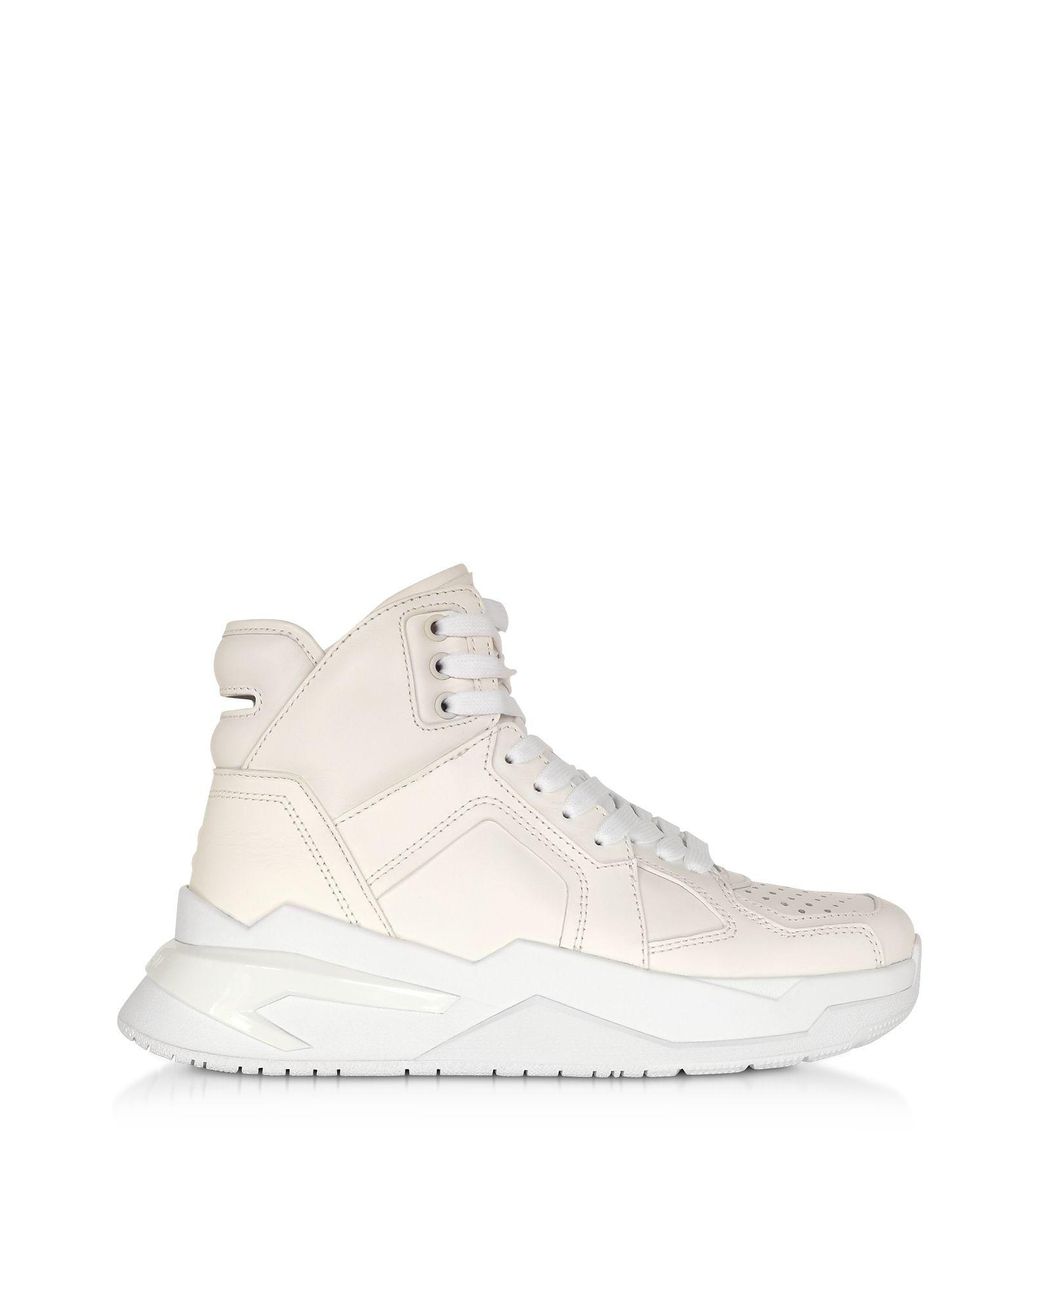 Balmain White Leather Hi Top Sneakers - Lyst